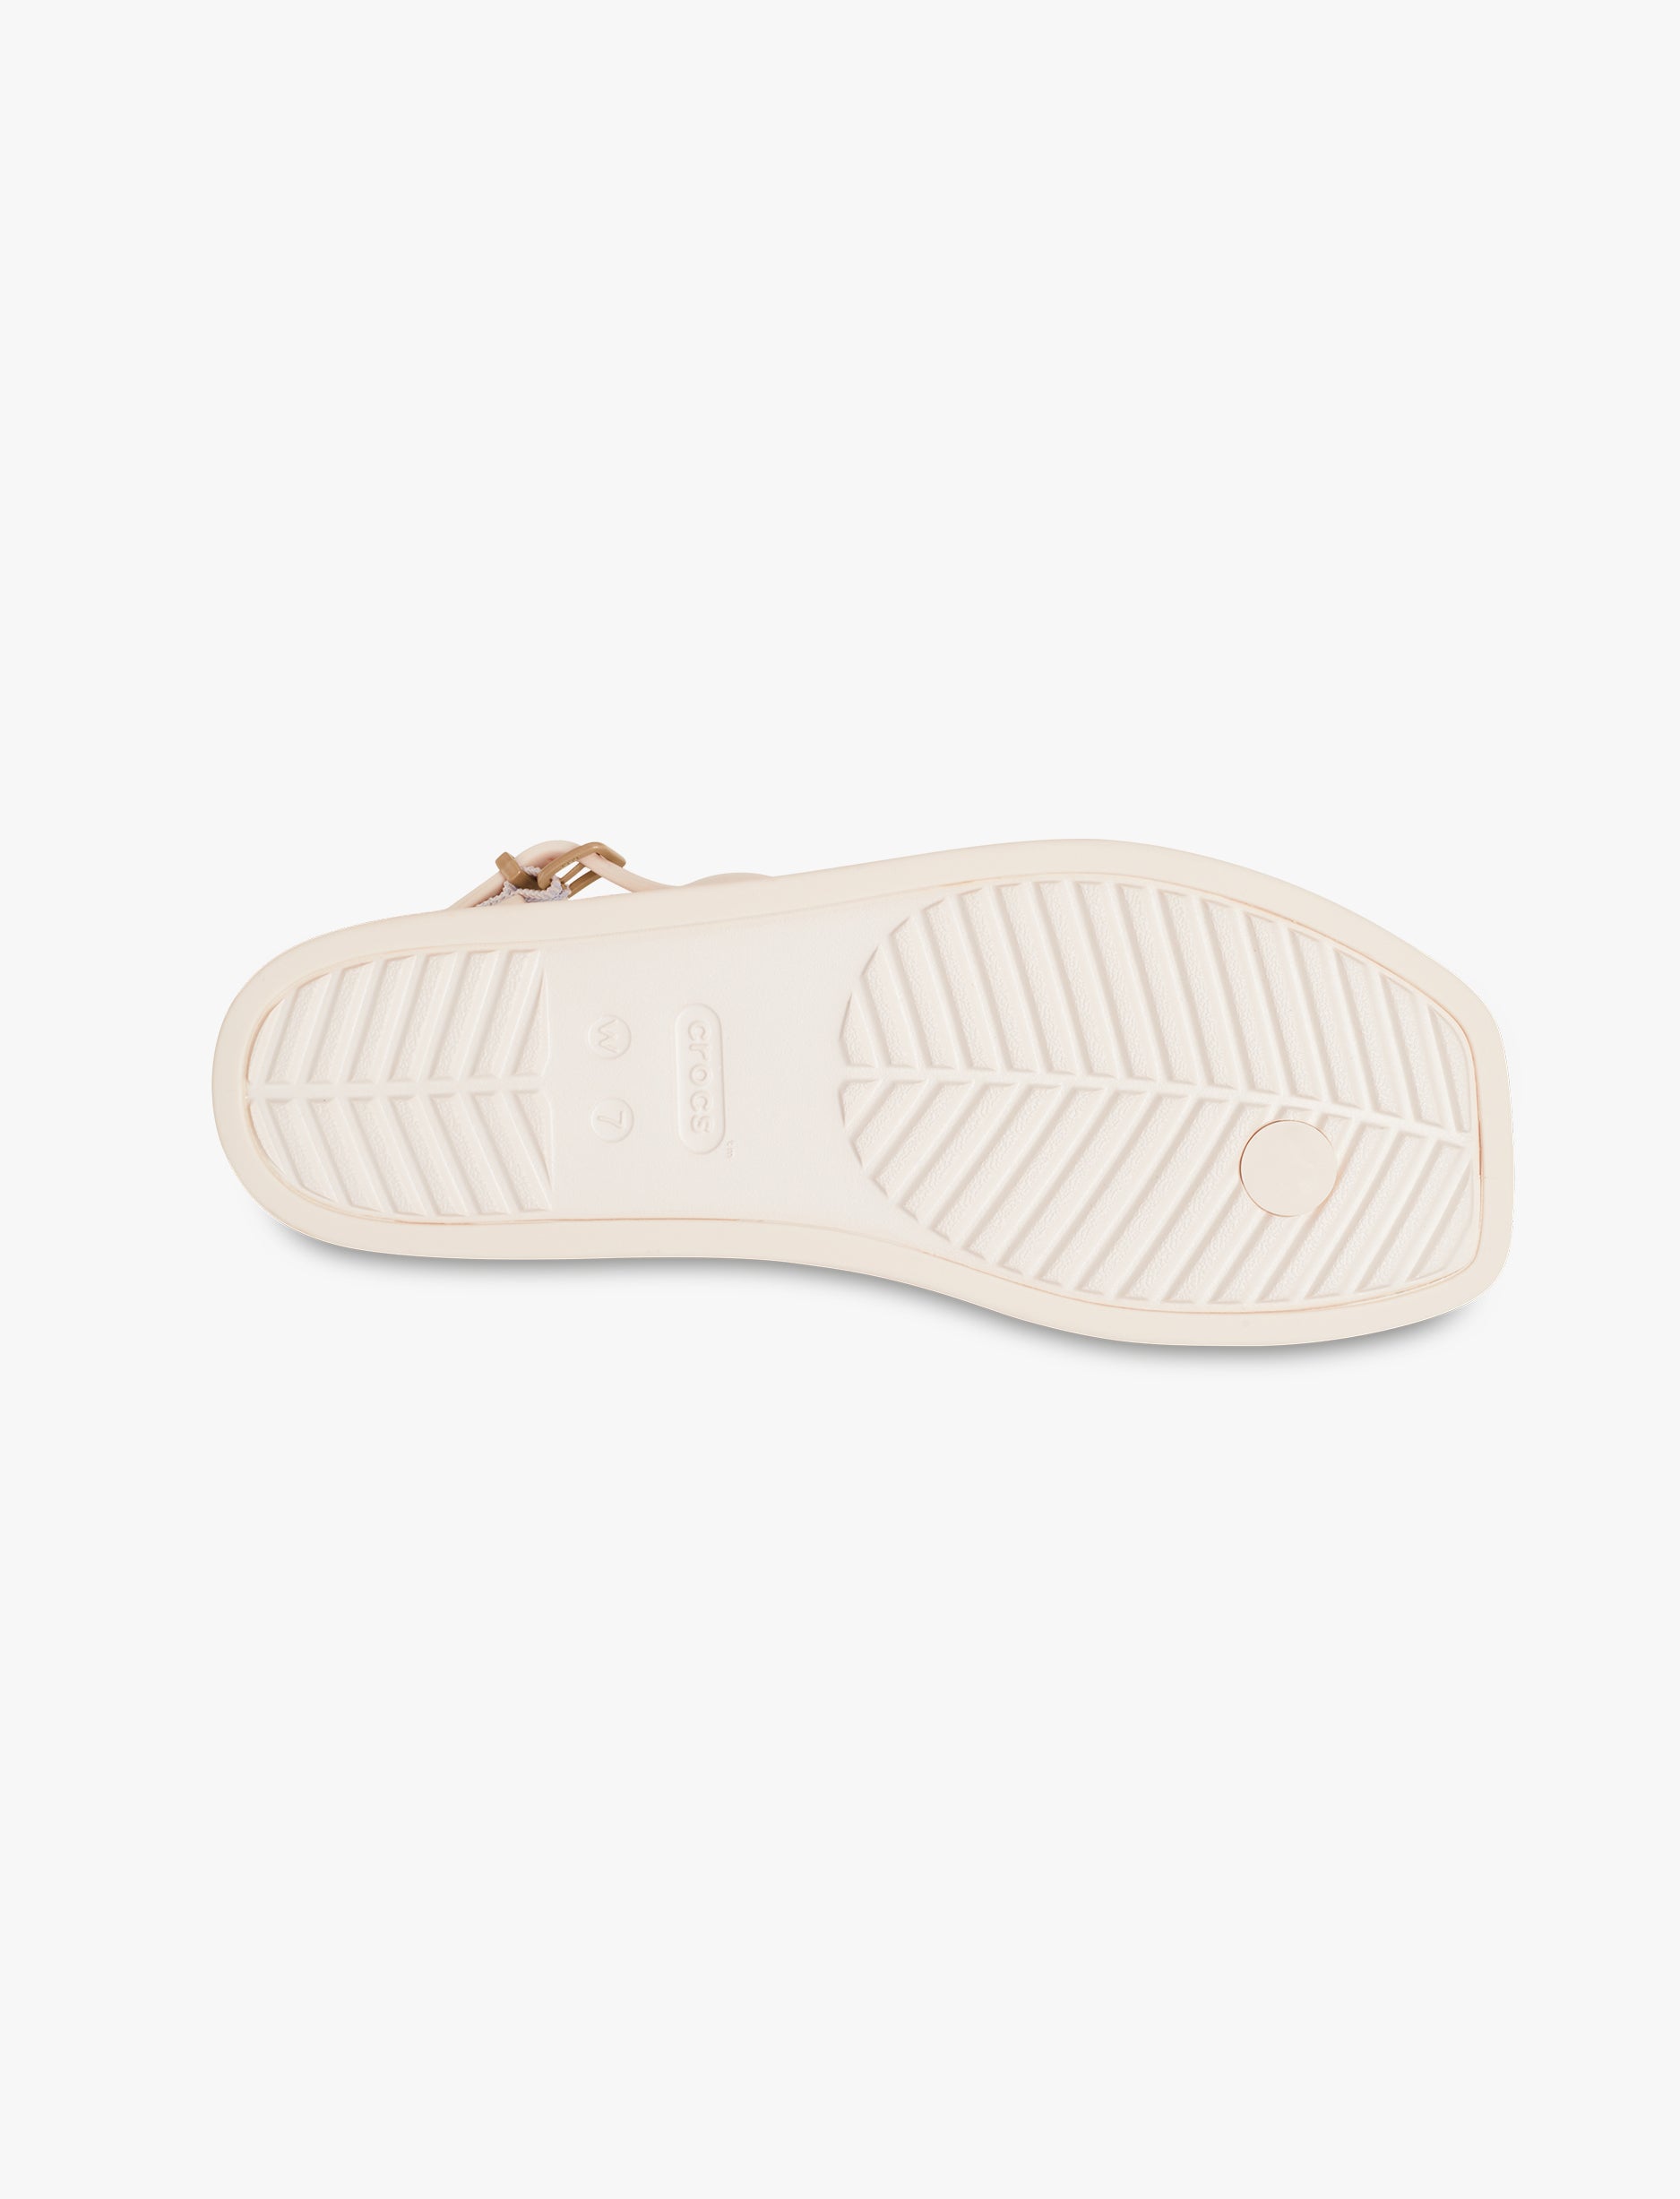 Miami Thong Sandal Crocs - סנדלי אצבע קרוקס לנשים בצבע לבן